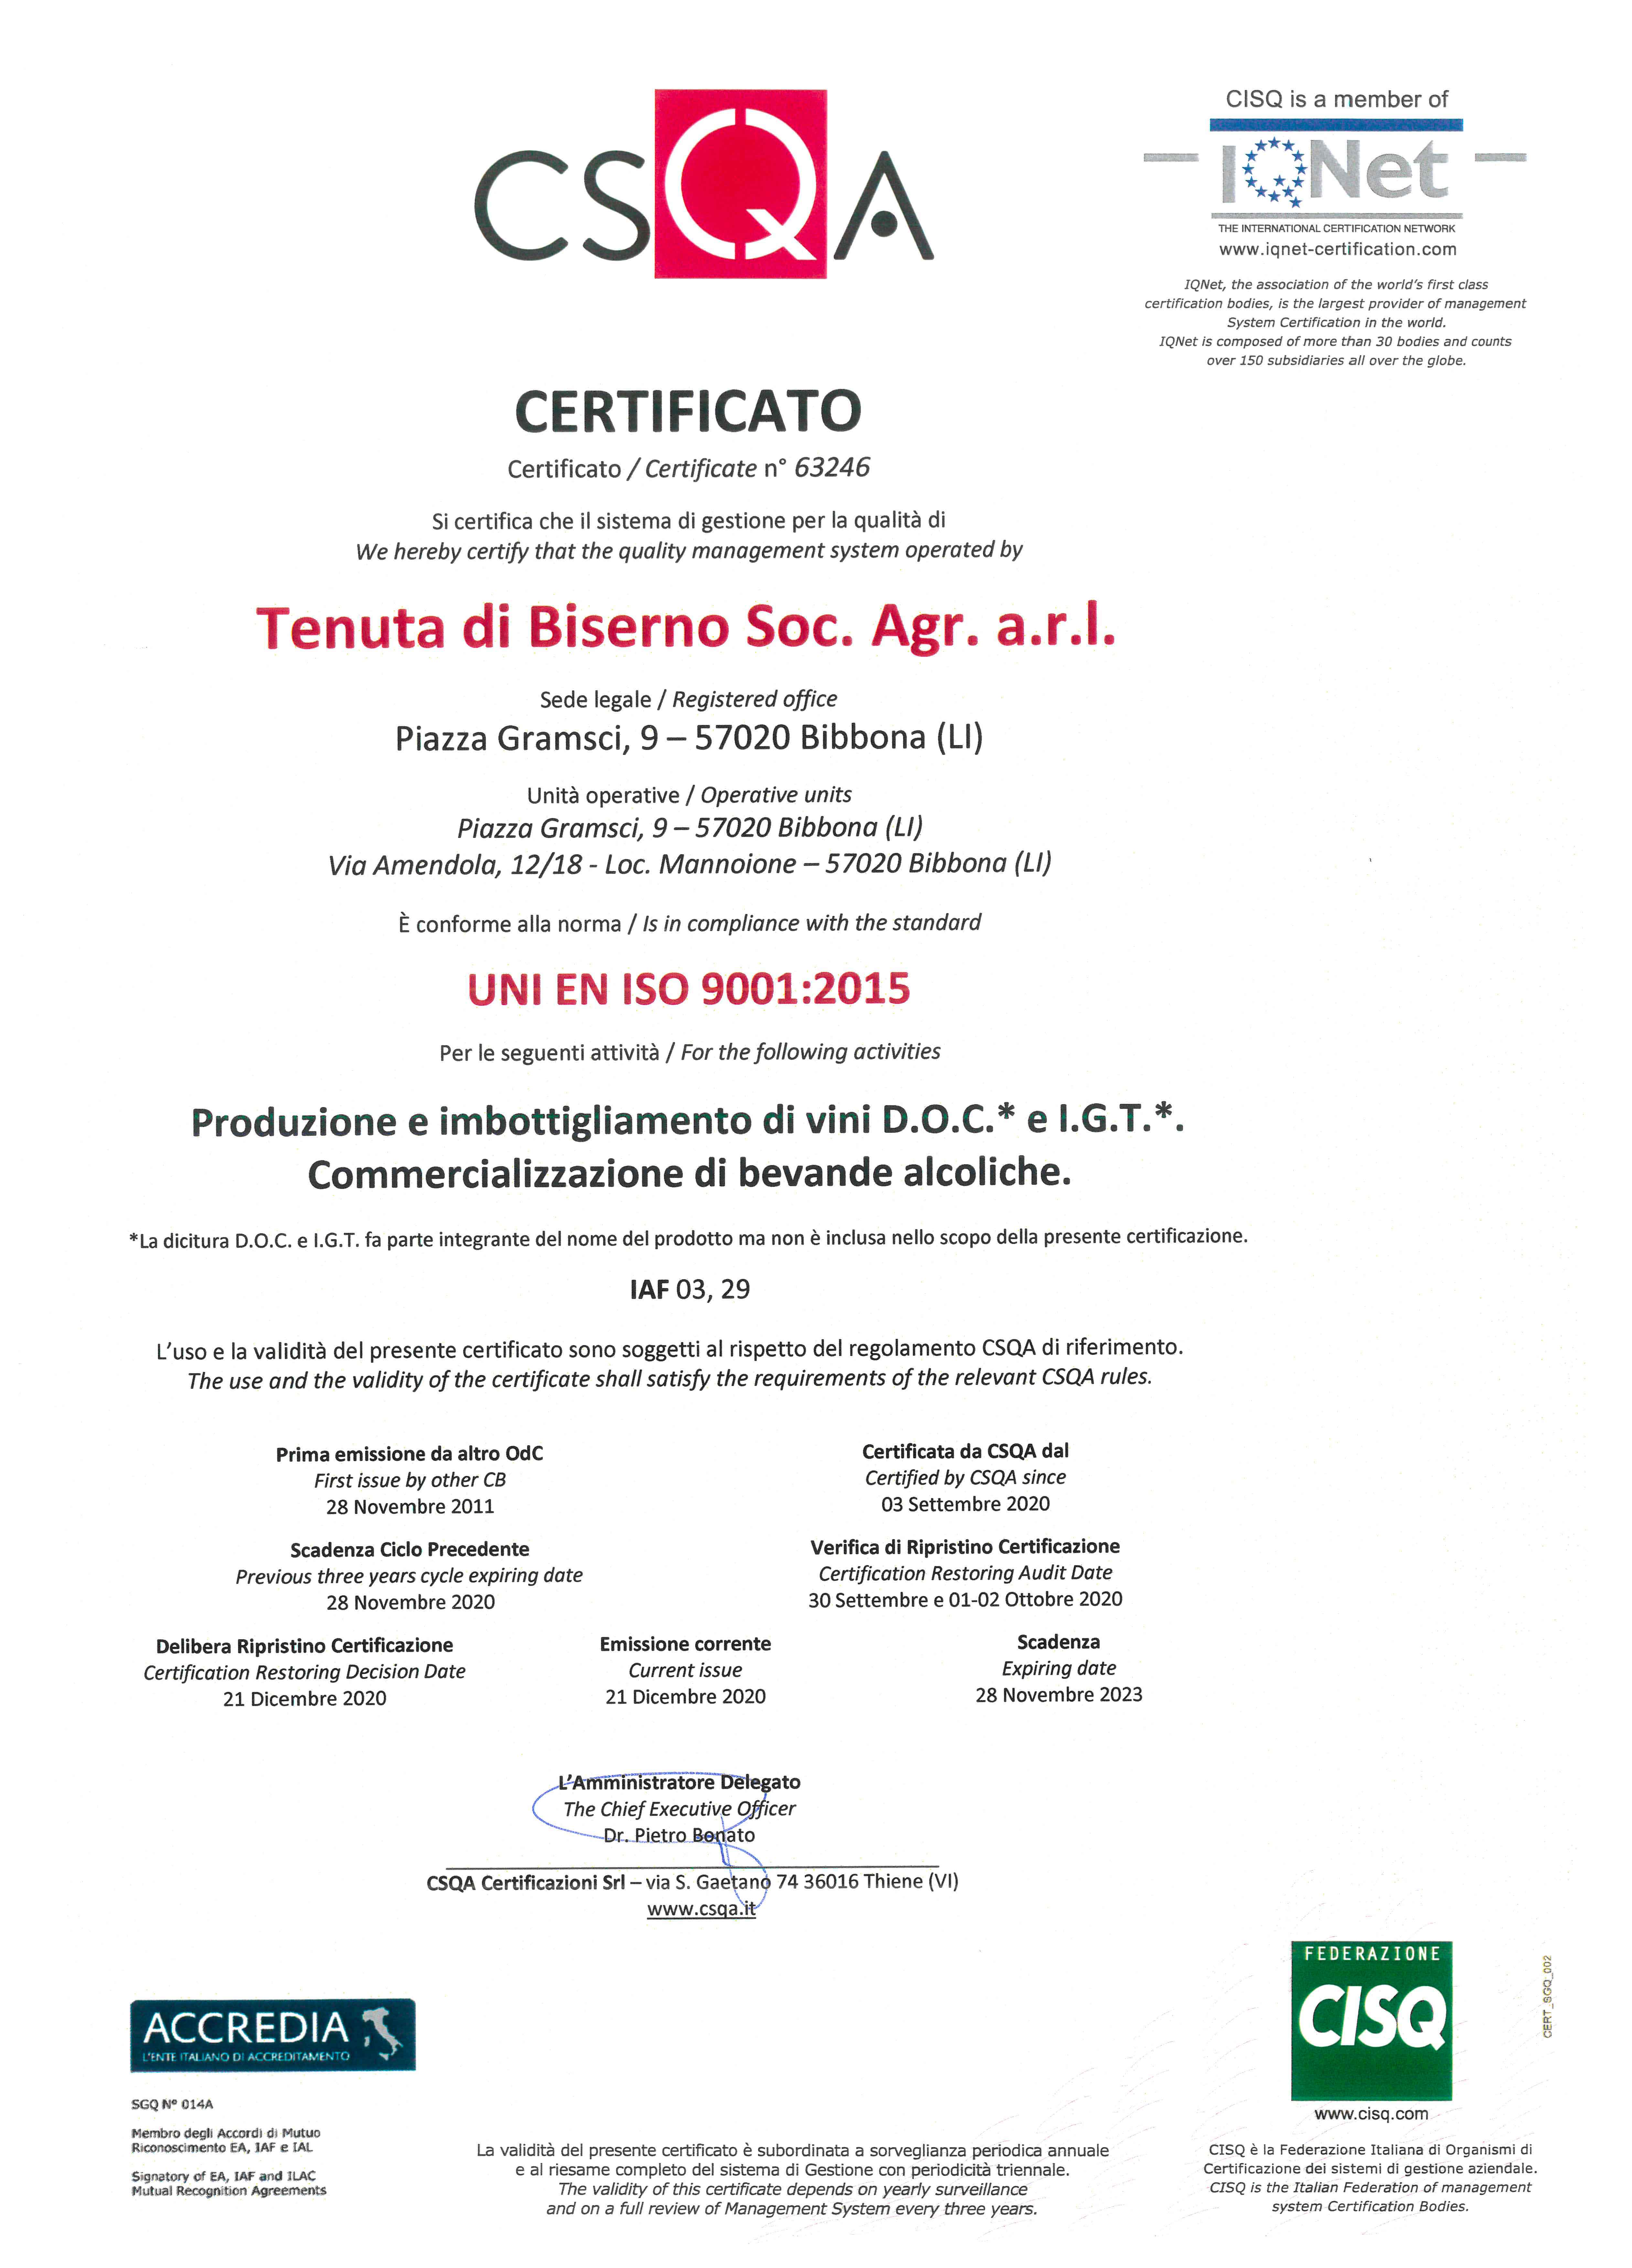 Certifications 3